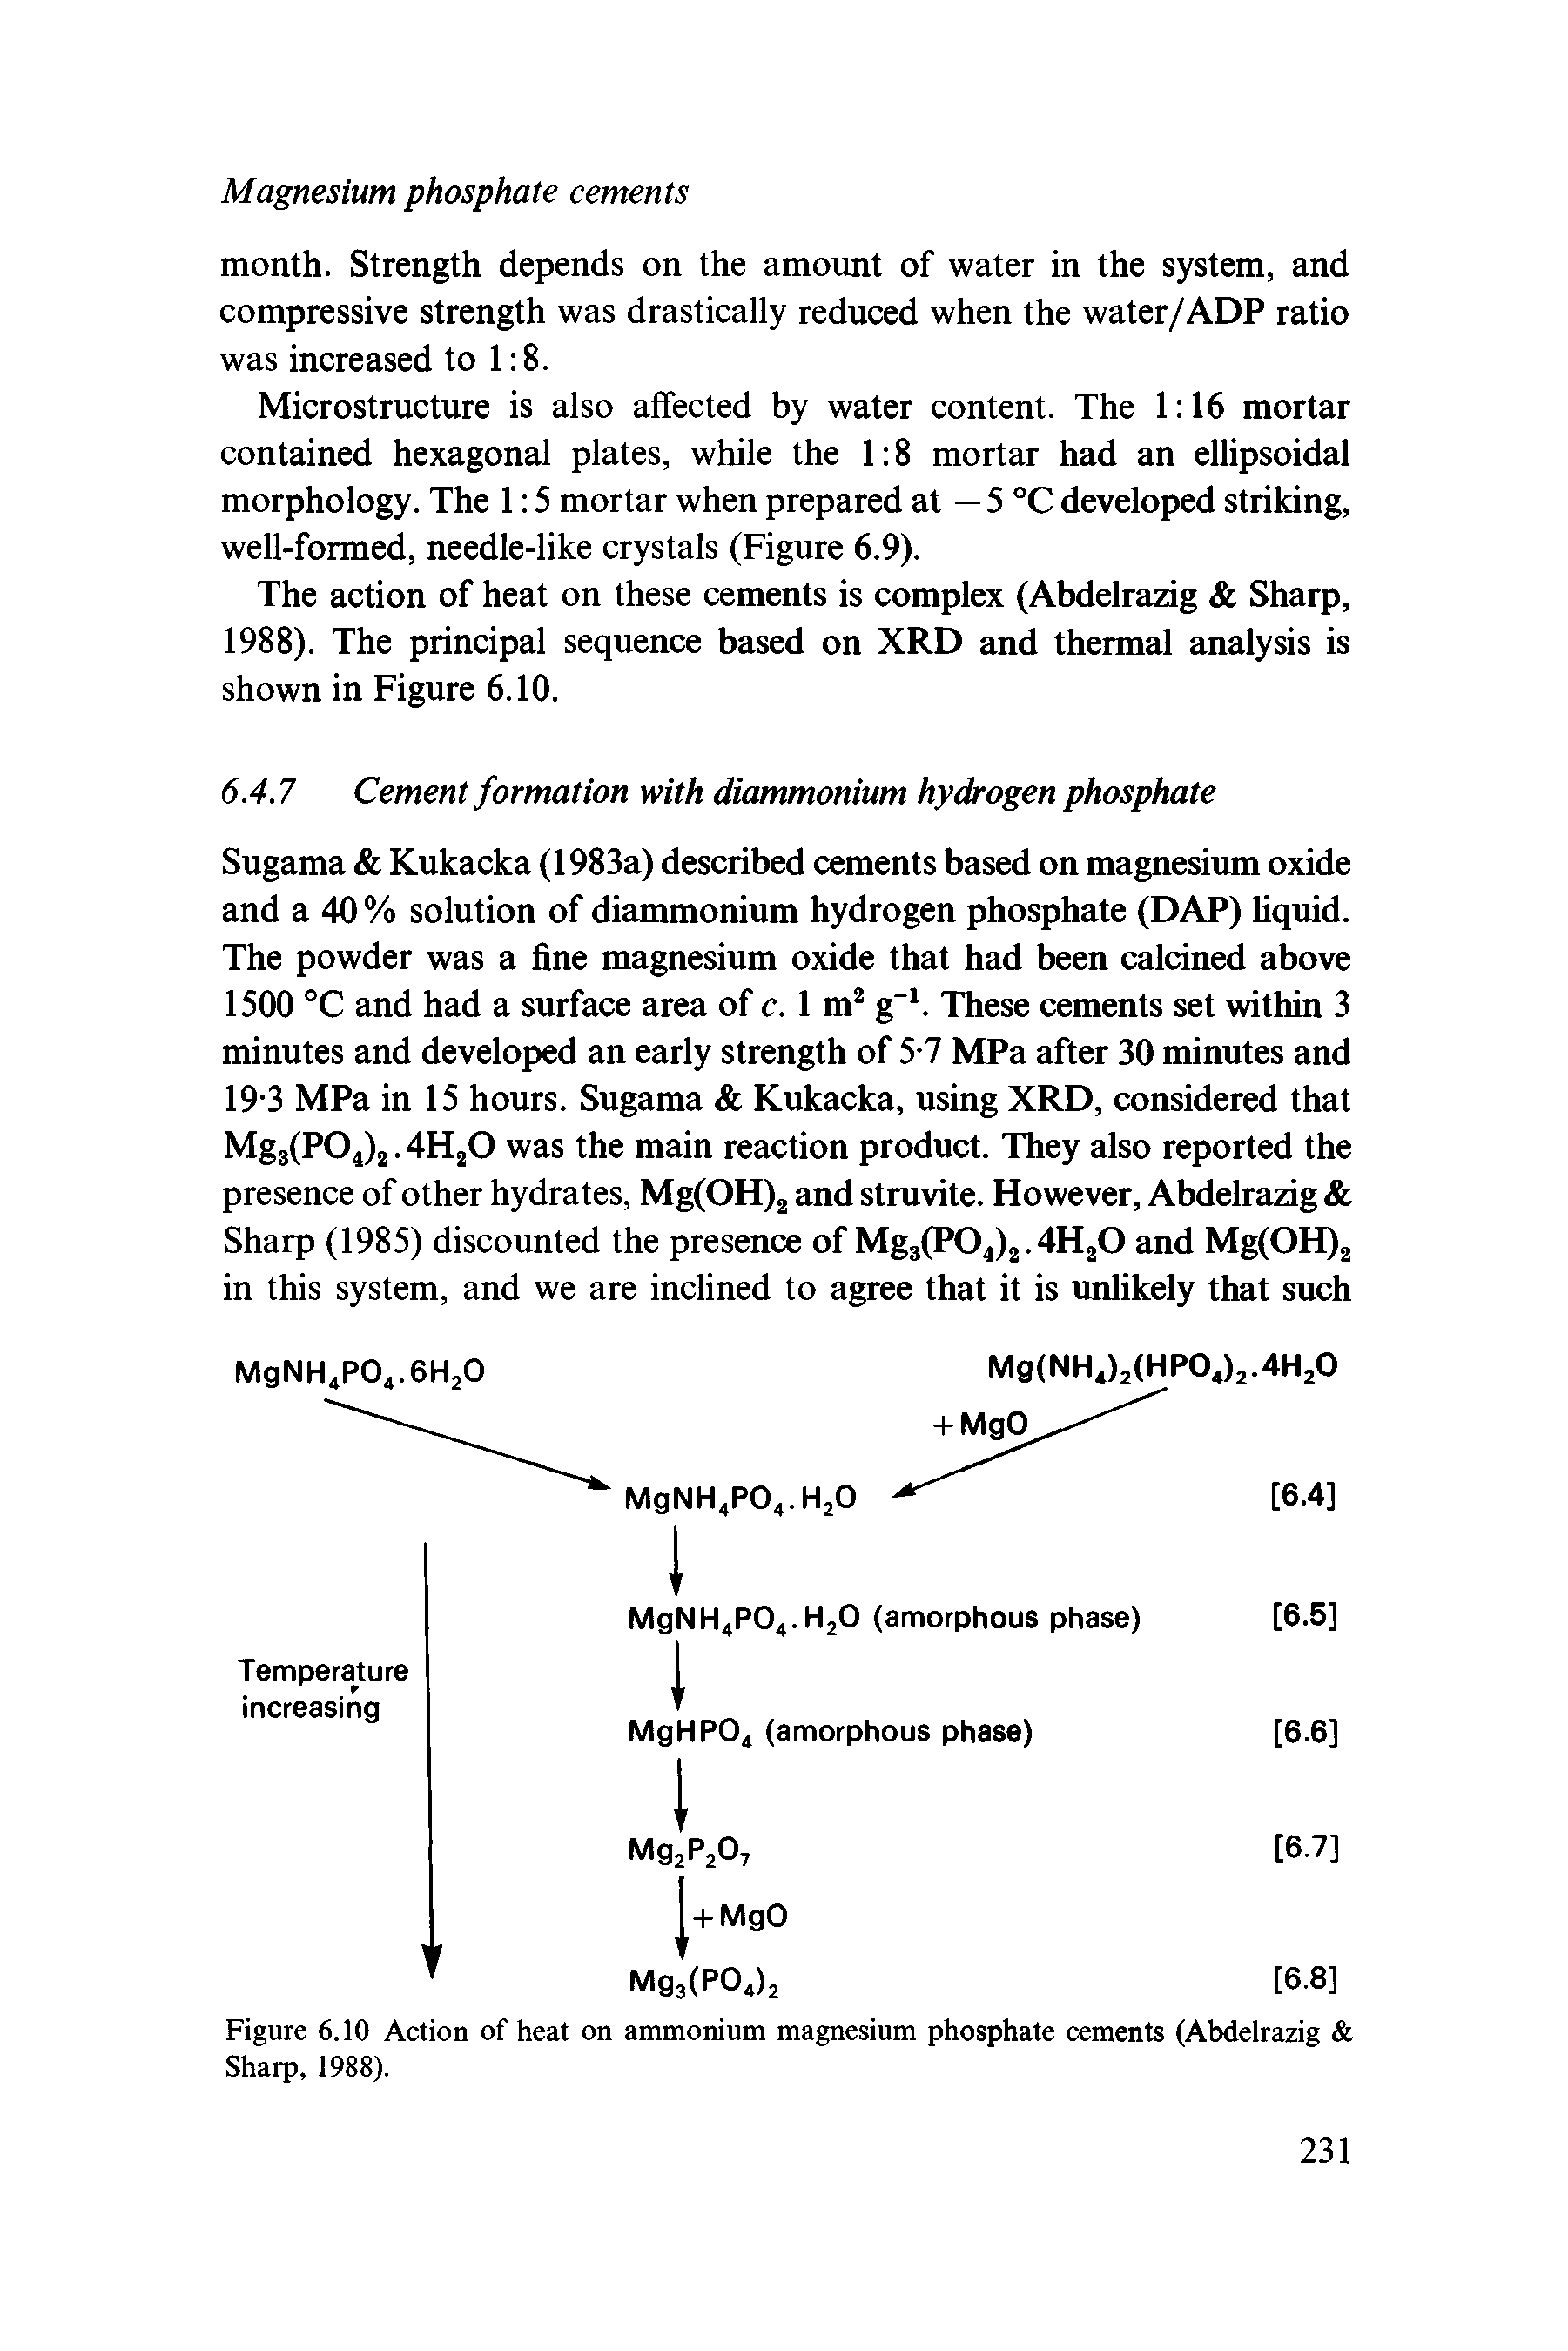 Figure 6.10 Action of heat on ammonium magnesium phosphate cements (Abdelrazig Sharp, 1988).